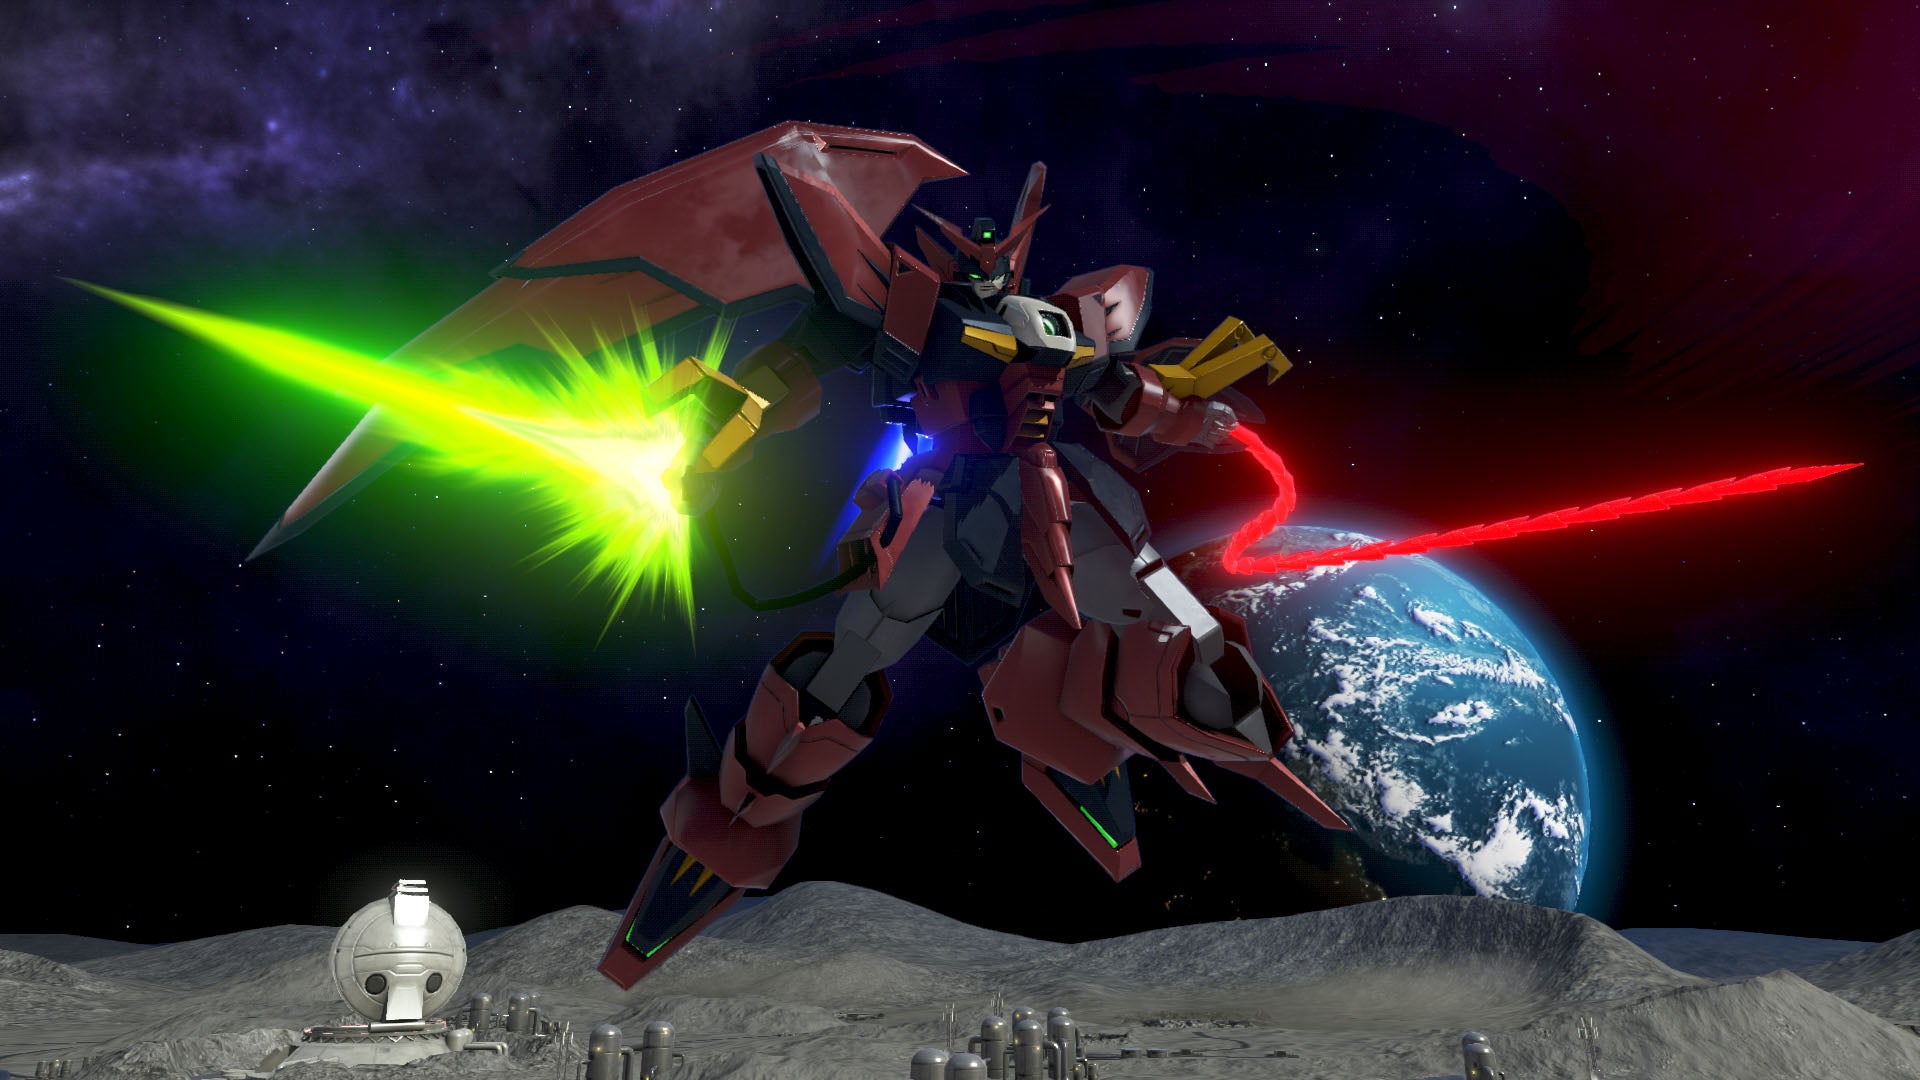 Gundam mecha firing weapons in space battle simulation.